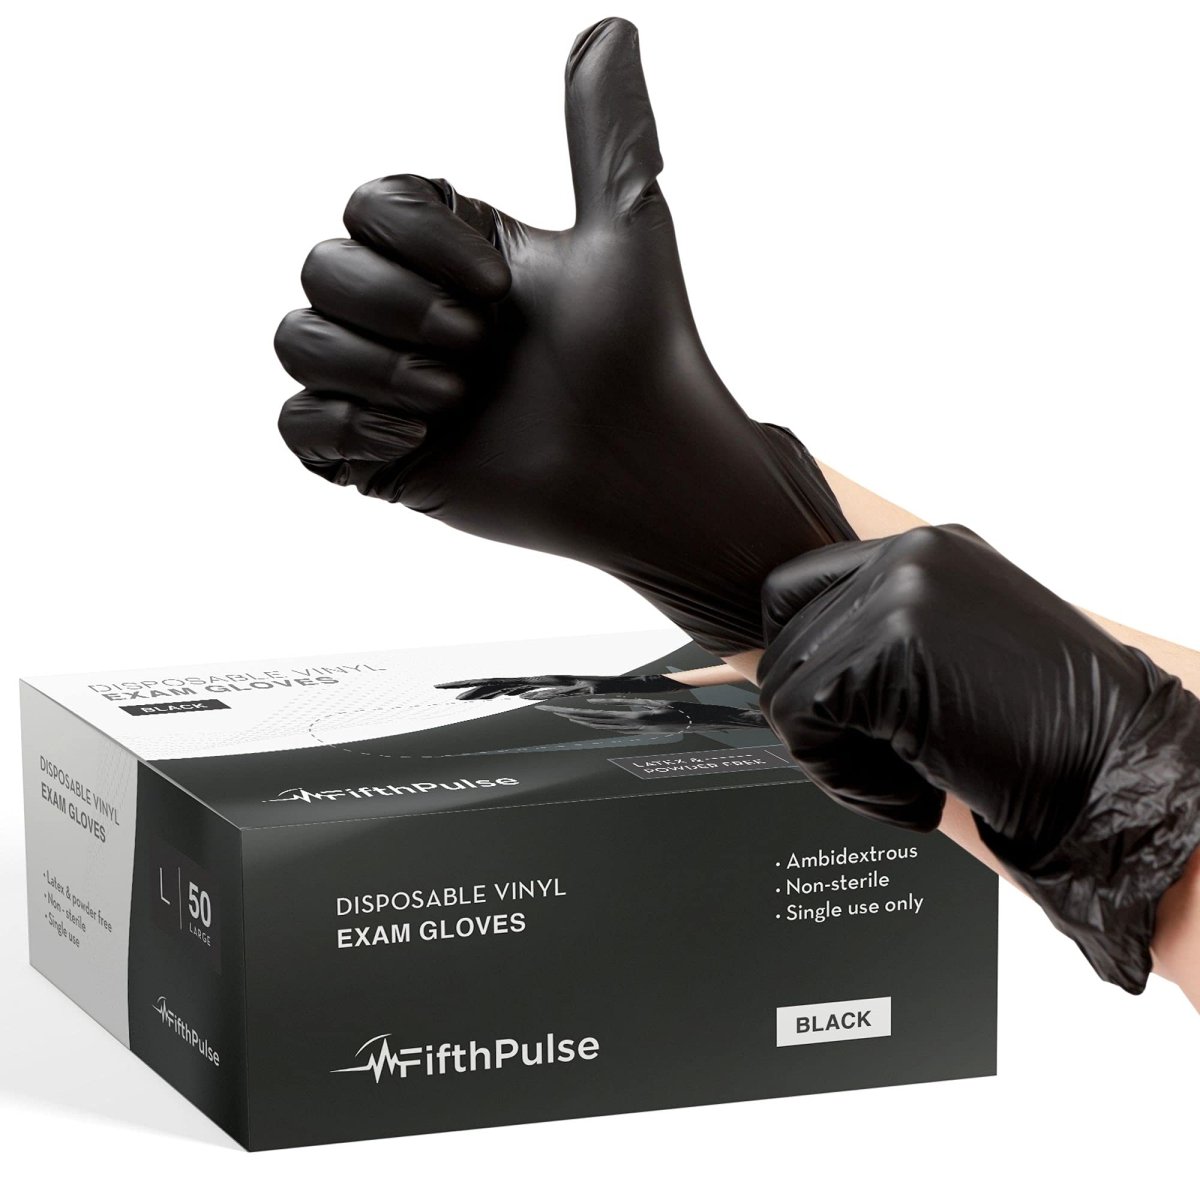 FifthPulse Small Black Vinyl Disposable Gloves, Latex-Free  3 mil Thickness - 50 pcs